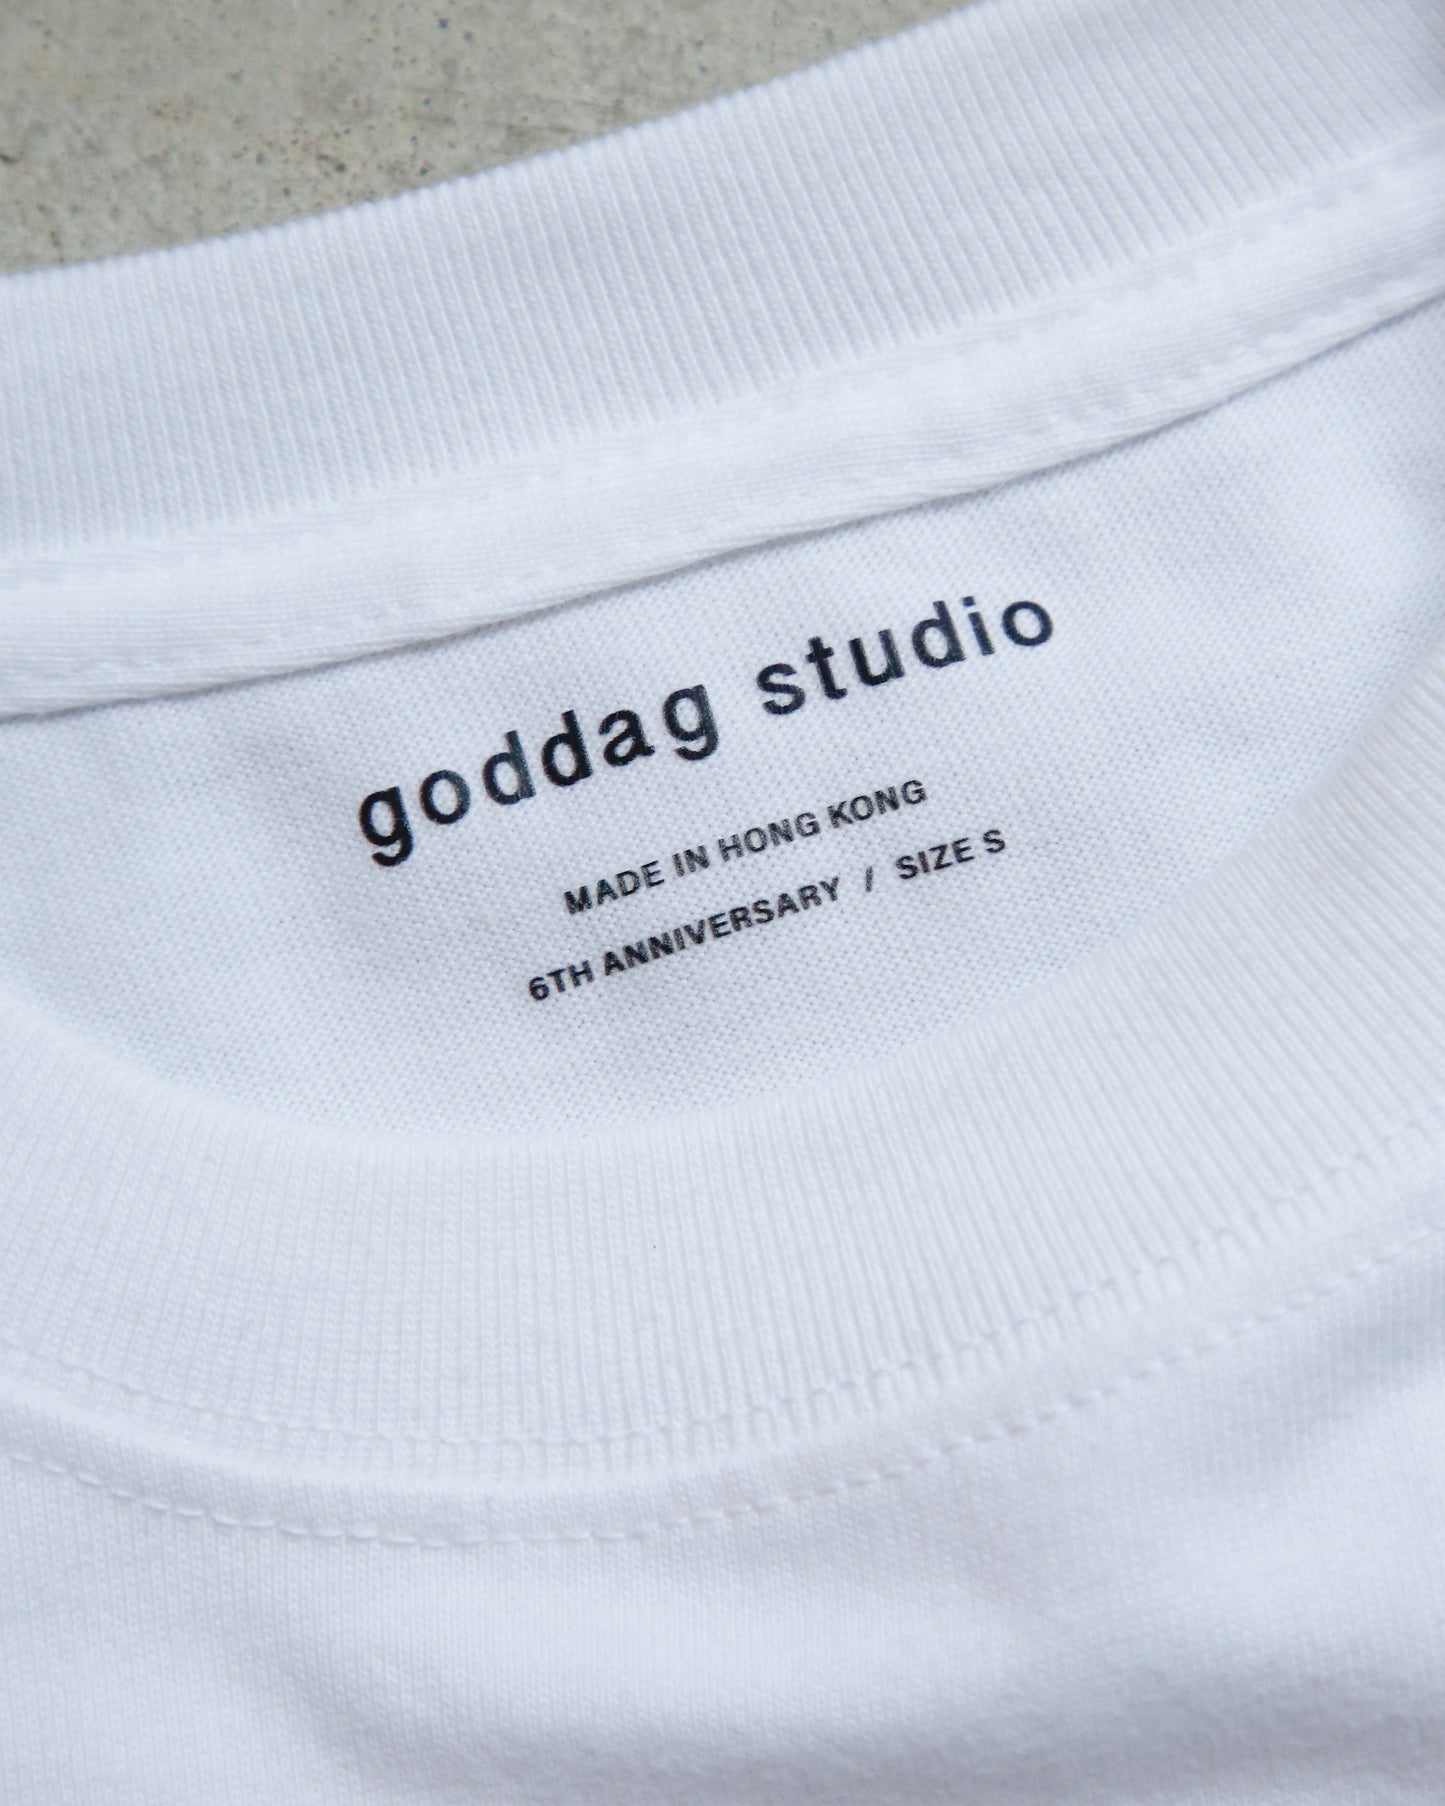 God Dag studio 6th anniversary set